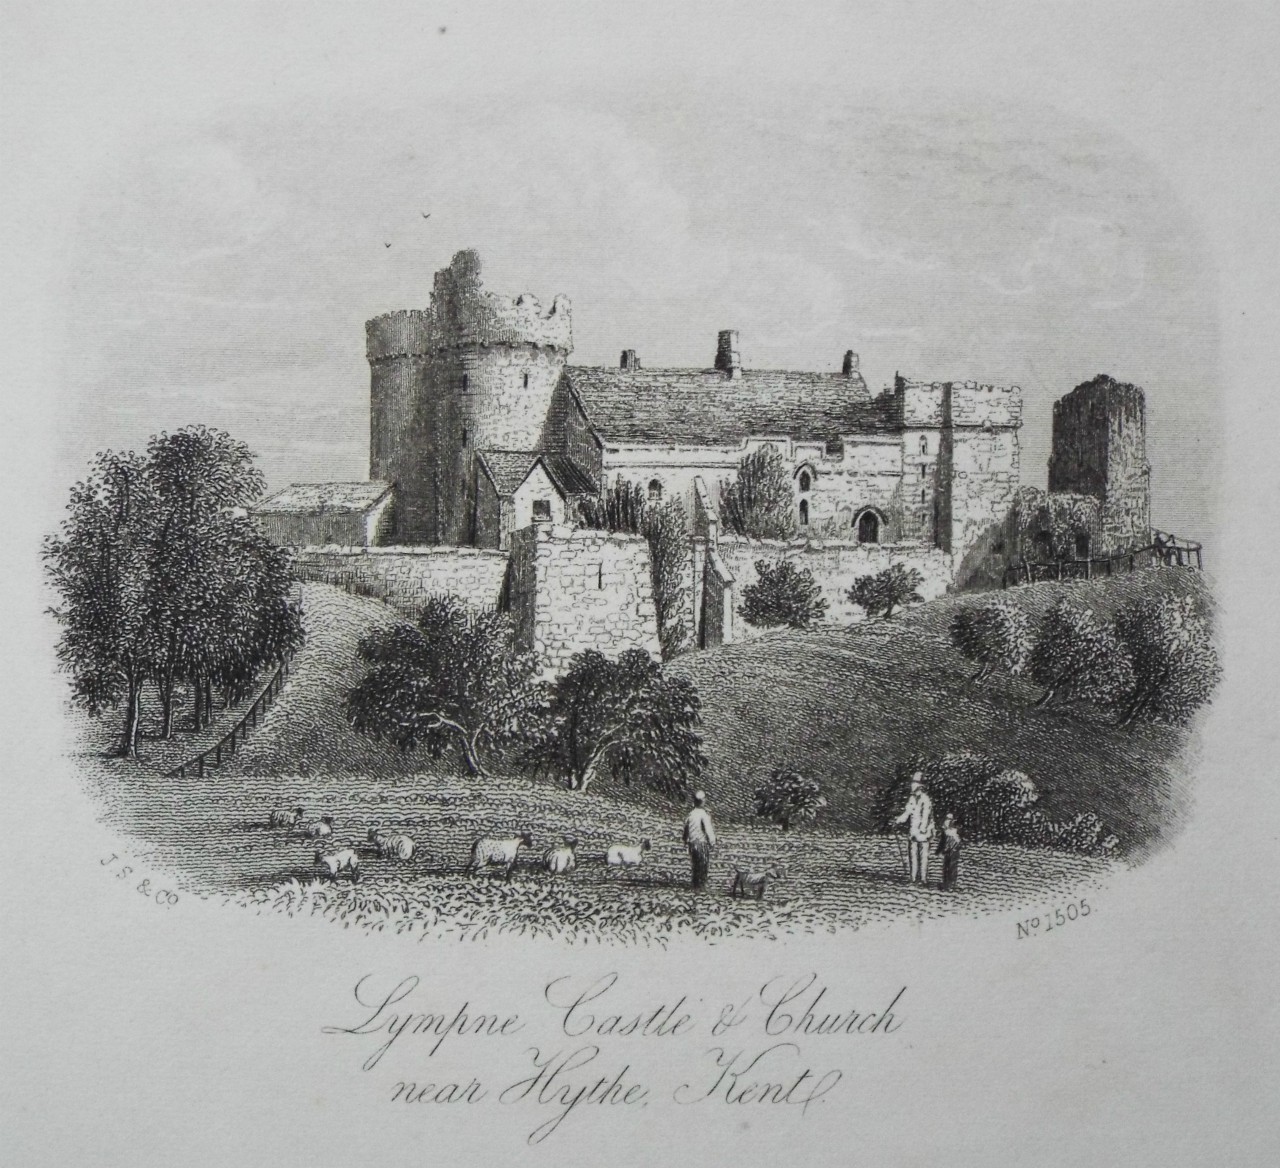 Steel Vignette - Lympne Castle & Church near Hythe, Kent. - J